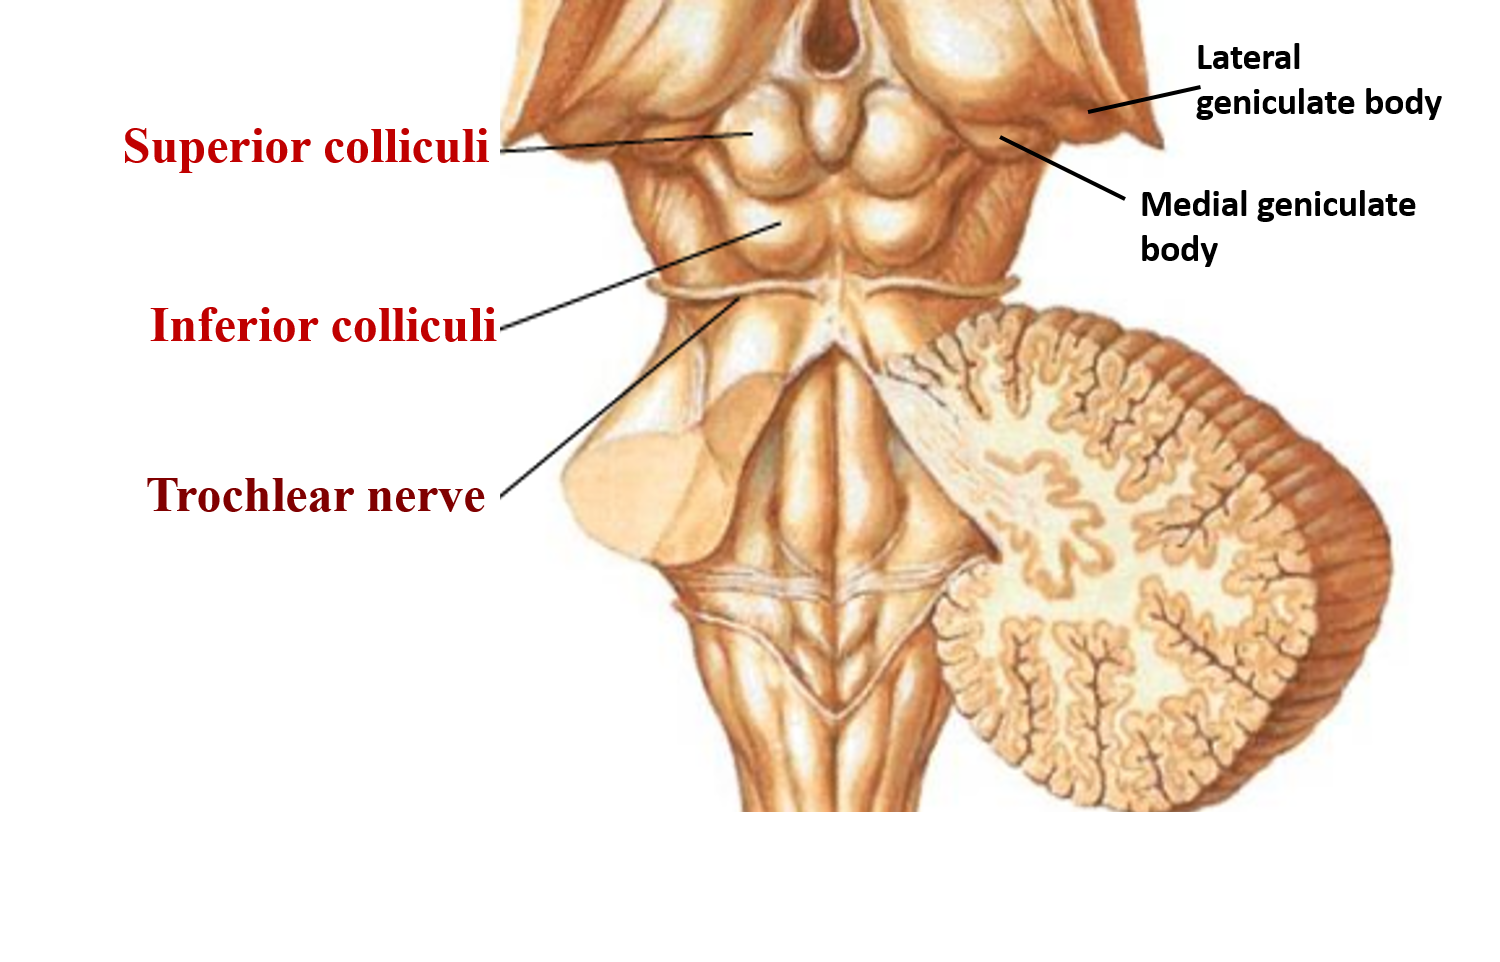 Midbrain anatomy- dorsal aspect of midbrain